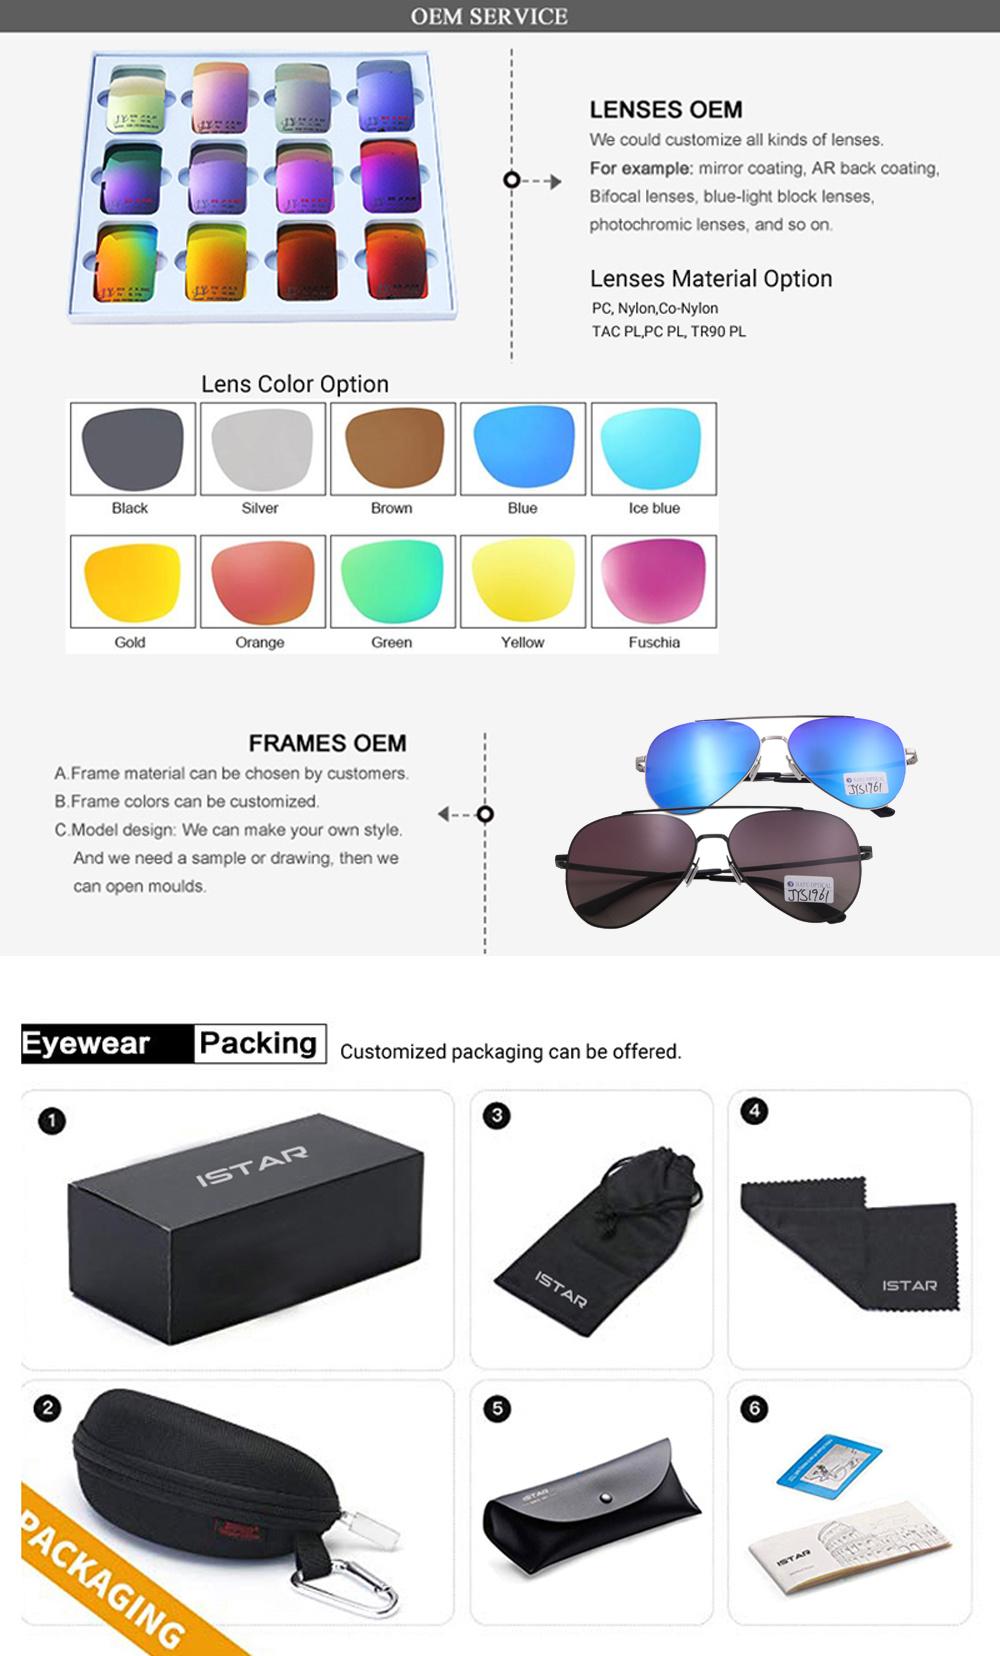 UV400 Protection Demi Color Frame Metal Arms Trendy Polarized Sunglasses